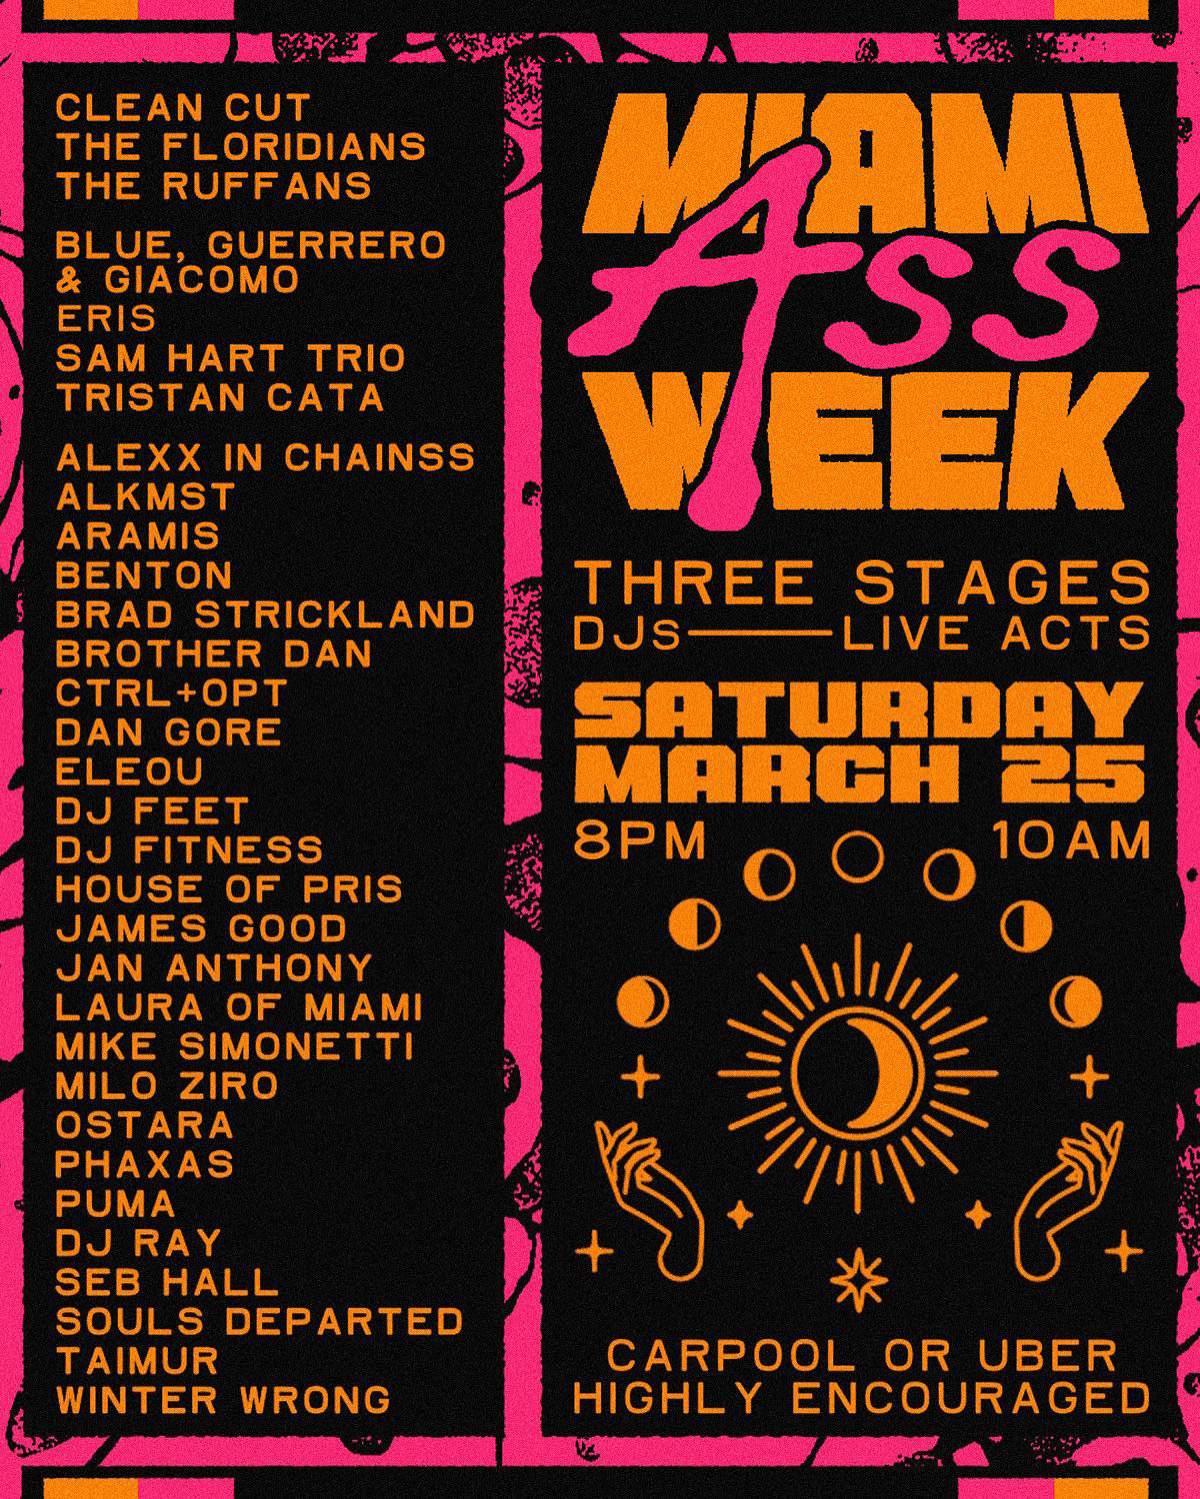 Miami Ass Week - Página frontal